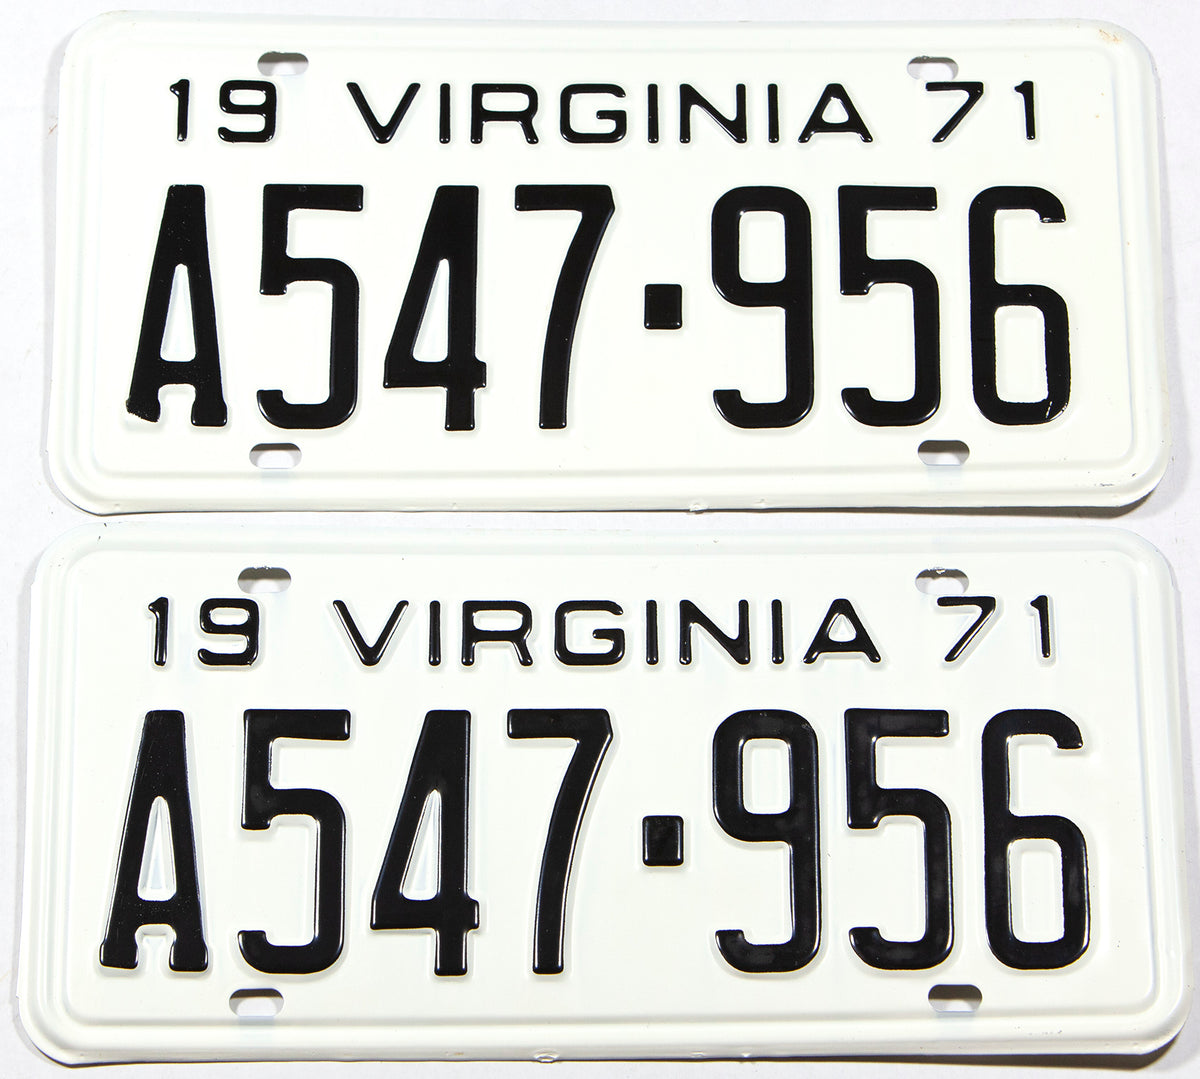 Classic pair of 1971 Virginia car license plates in NOS excellent condition